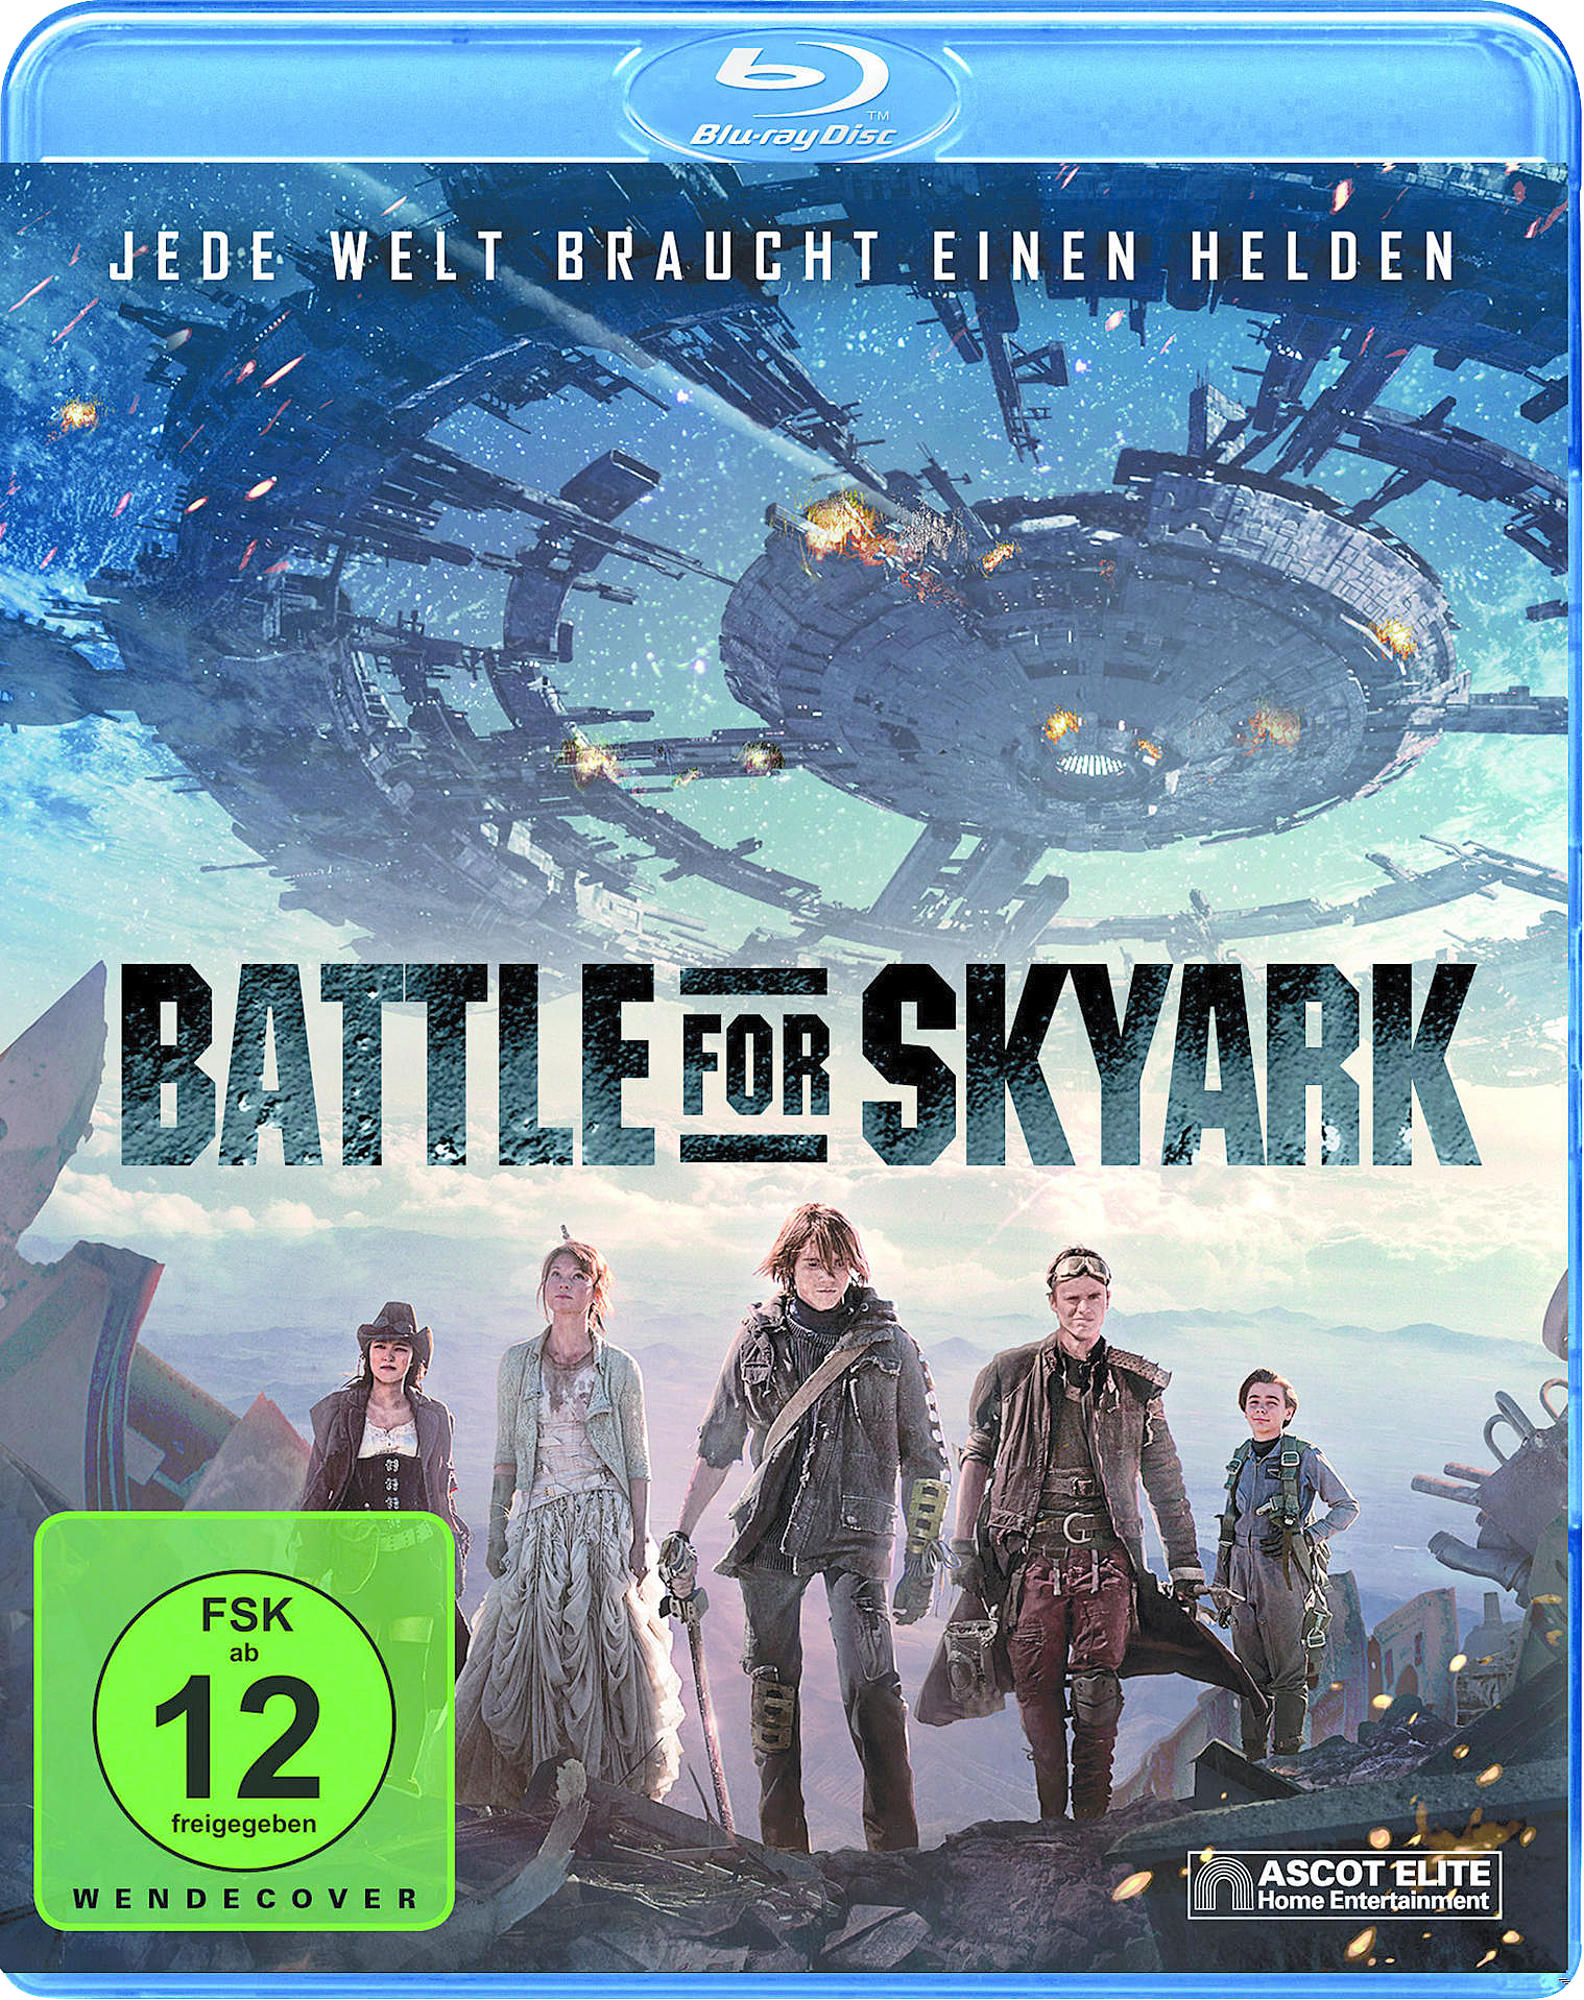 for SkyArk Battle Blu-ray